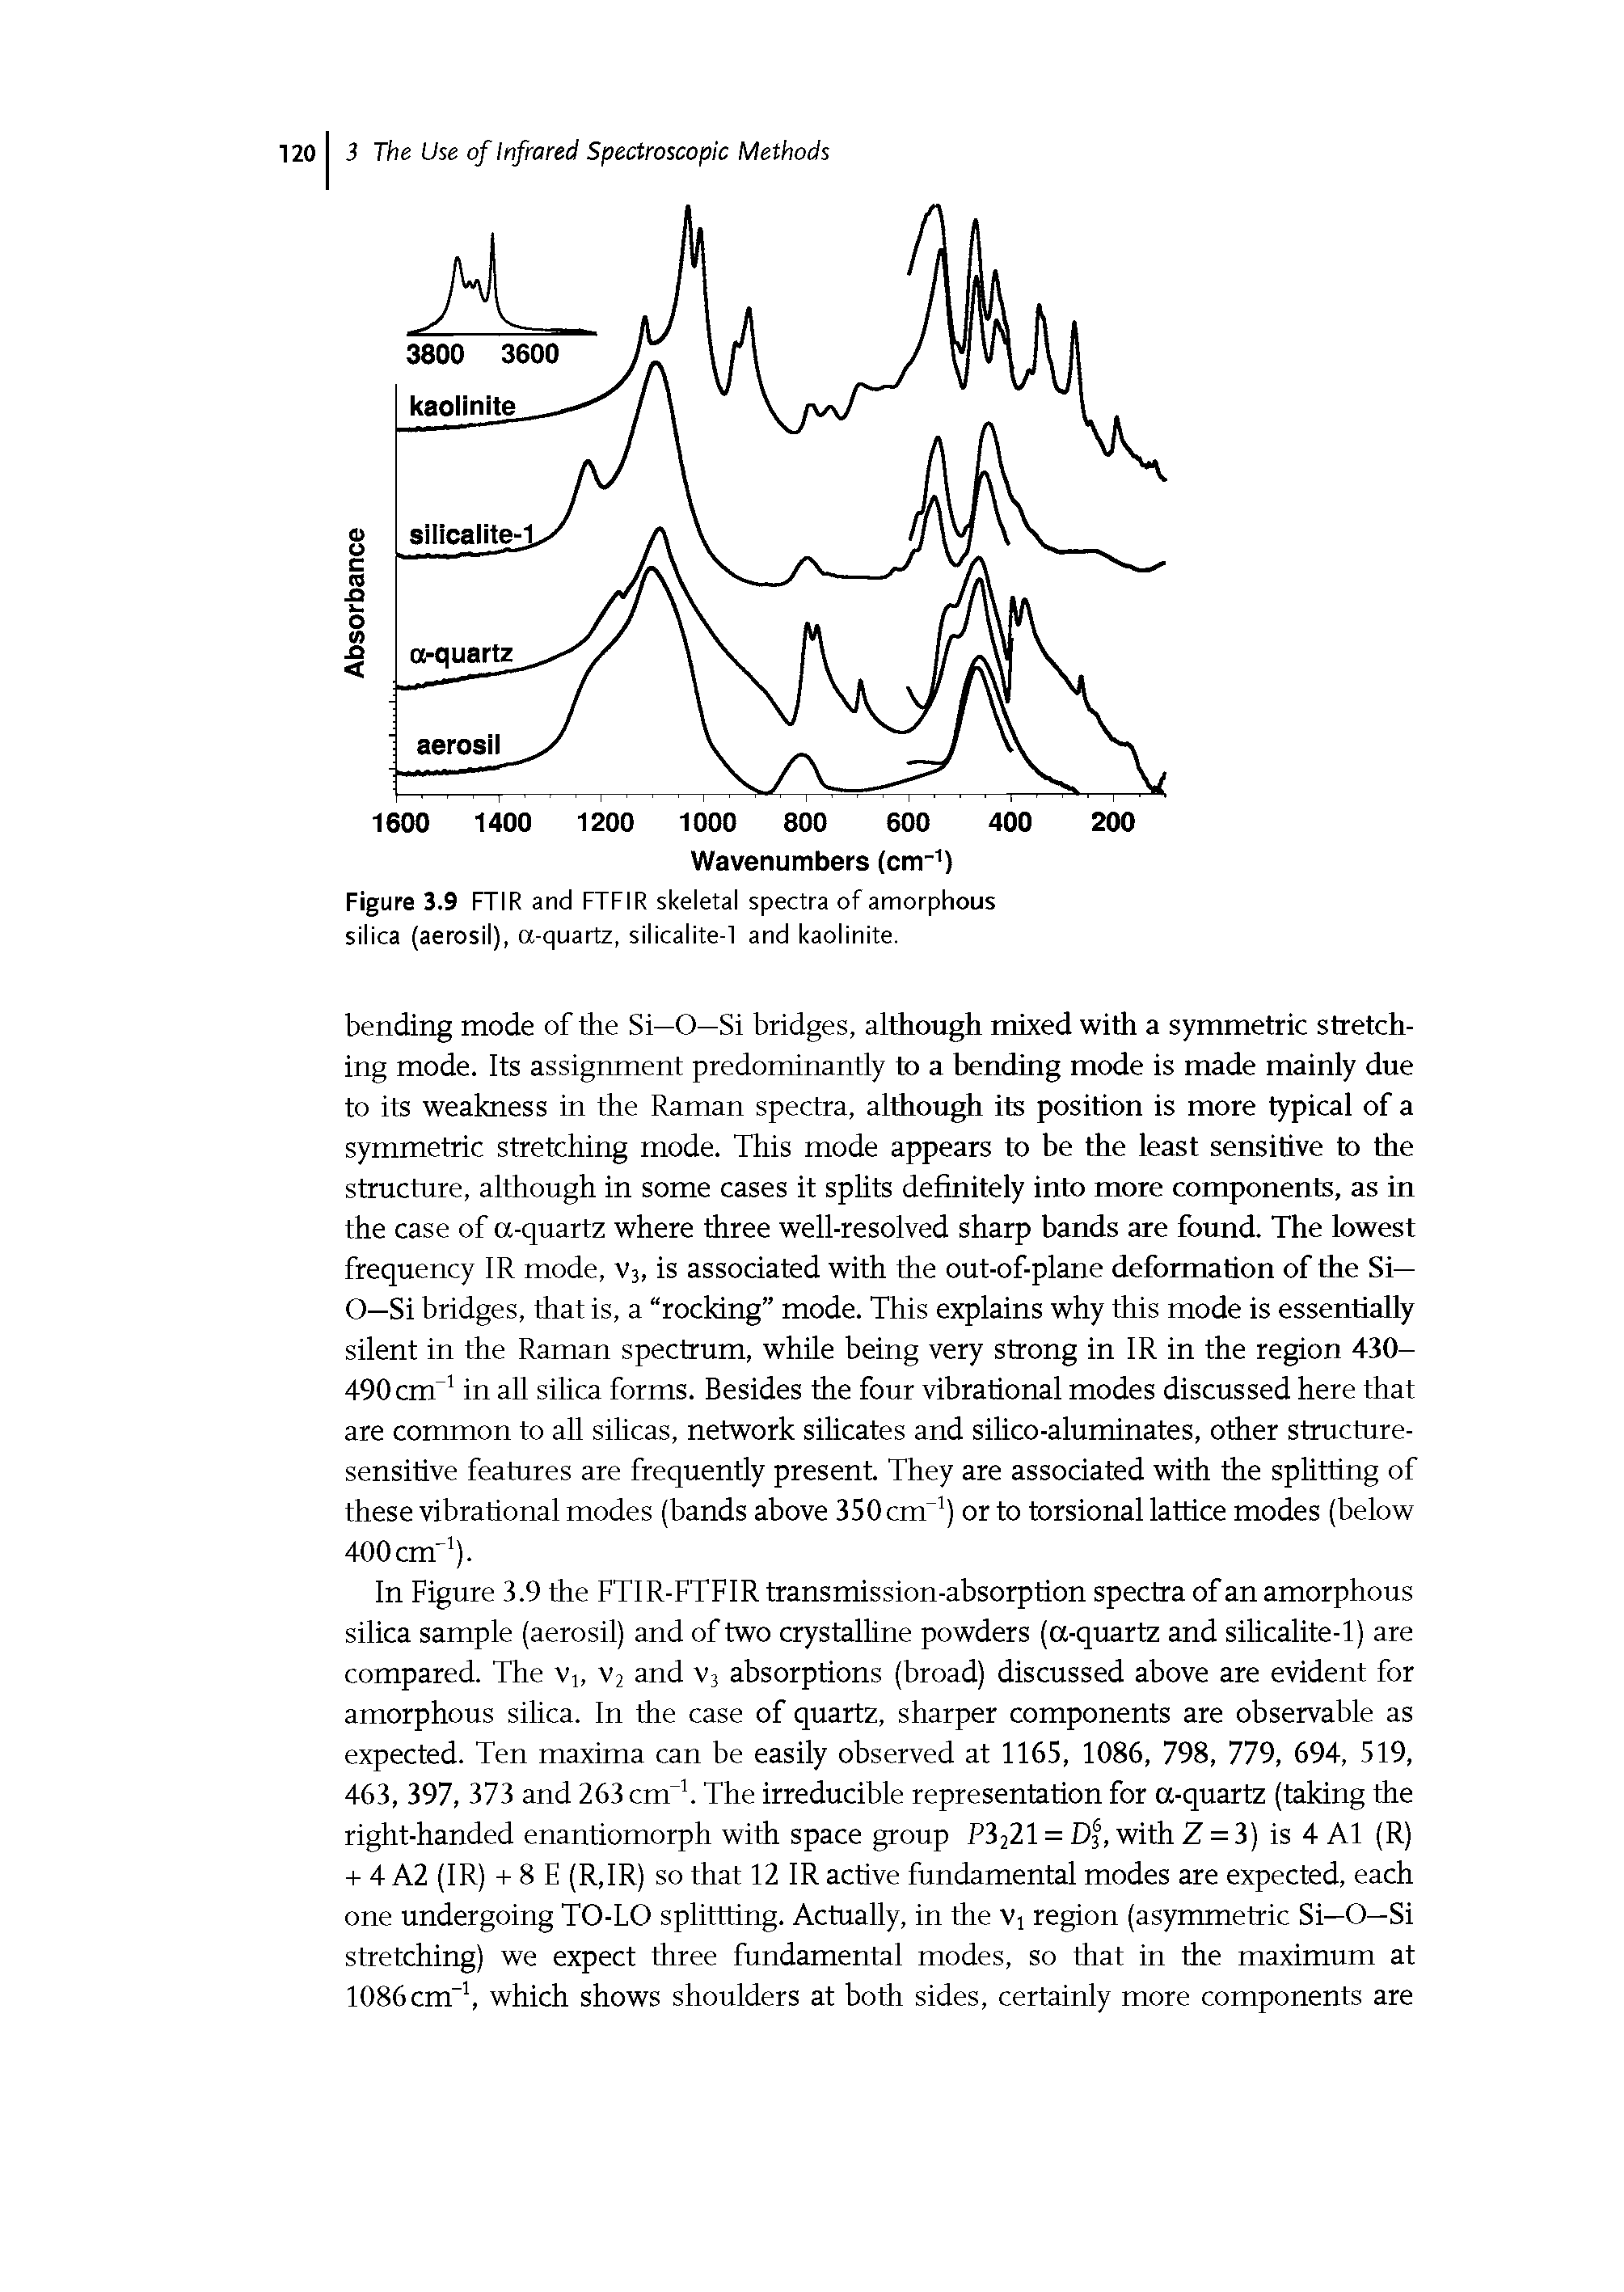 Figure 3.9 FTIR and FTFIR skeletal spectra of amorphous silica (aerosil), a-quartz, silicalite-1 and kaolinite.